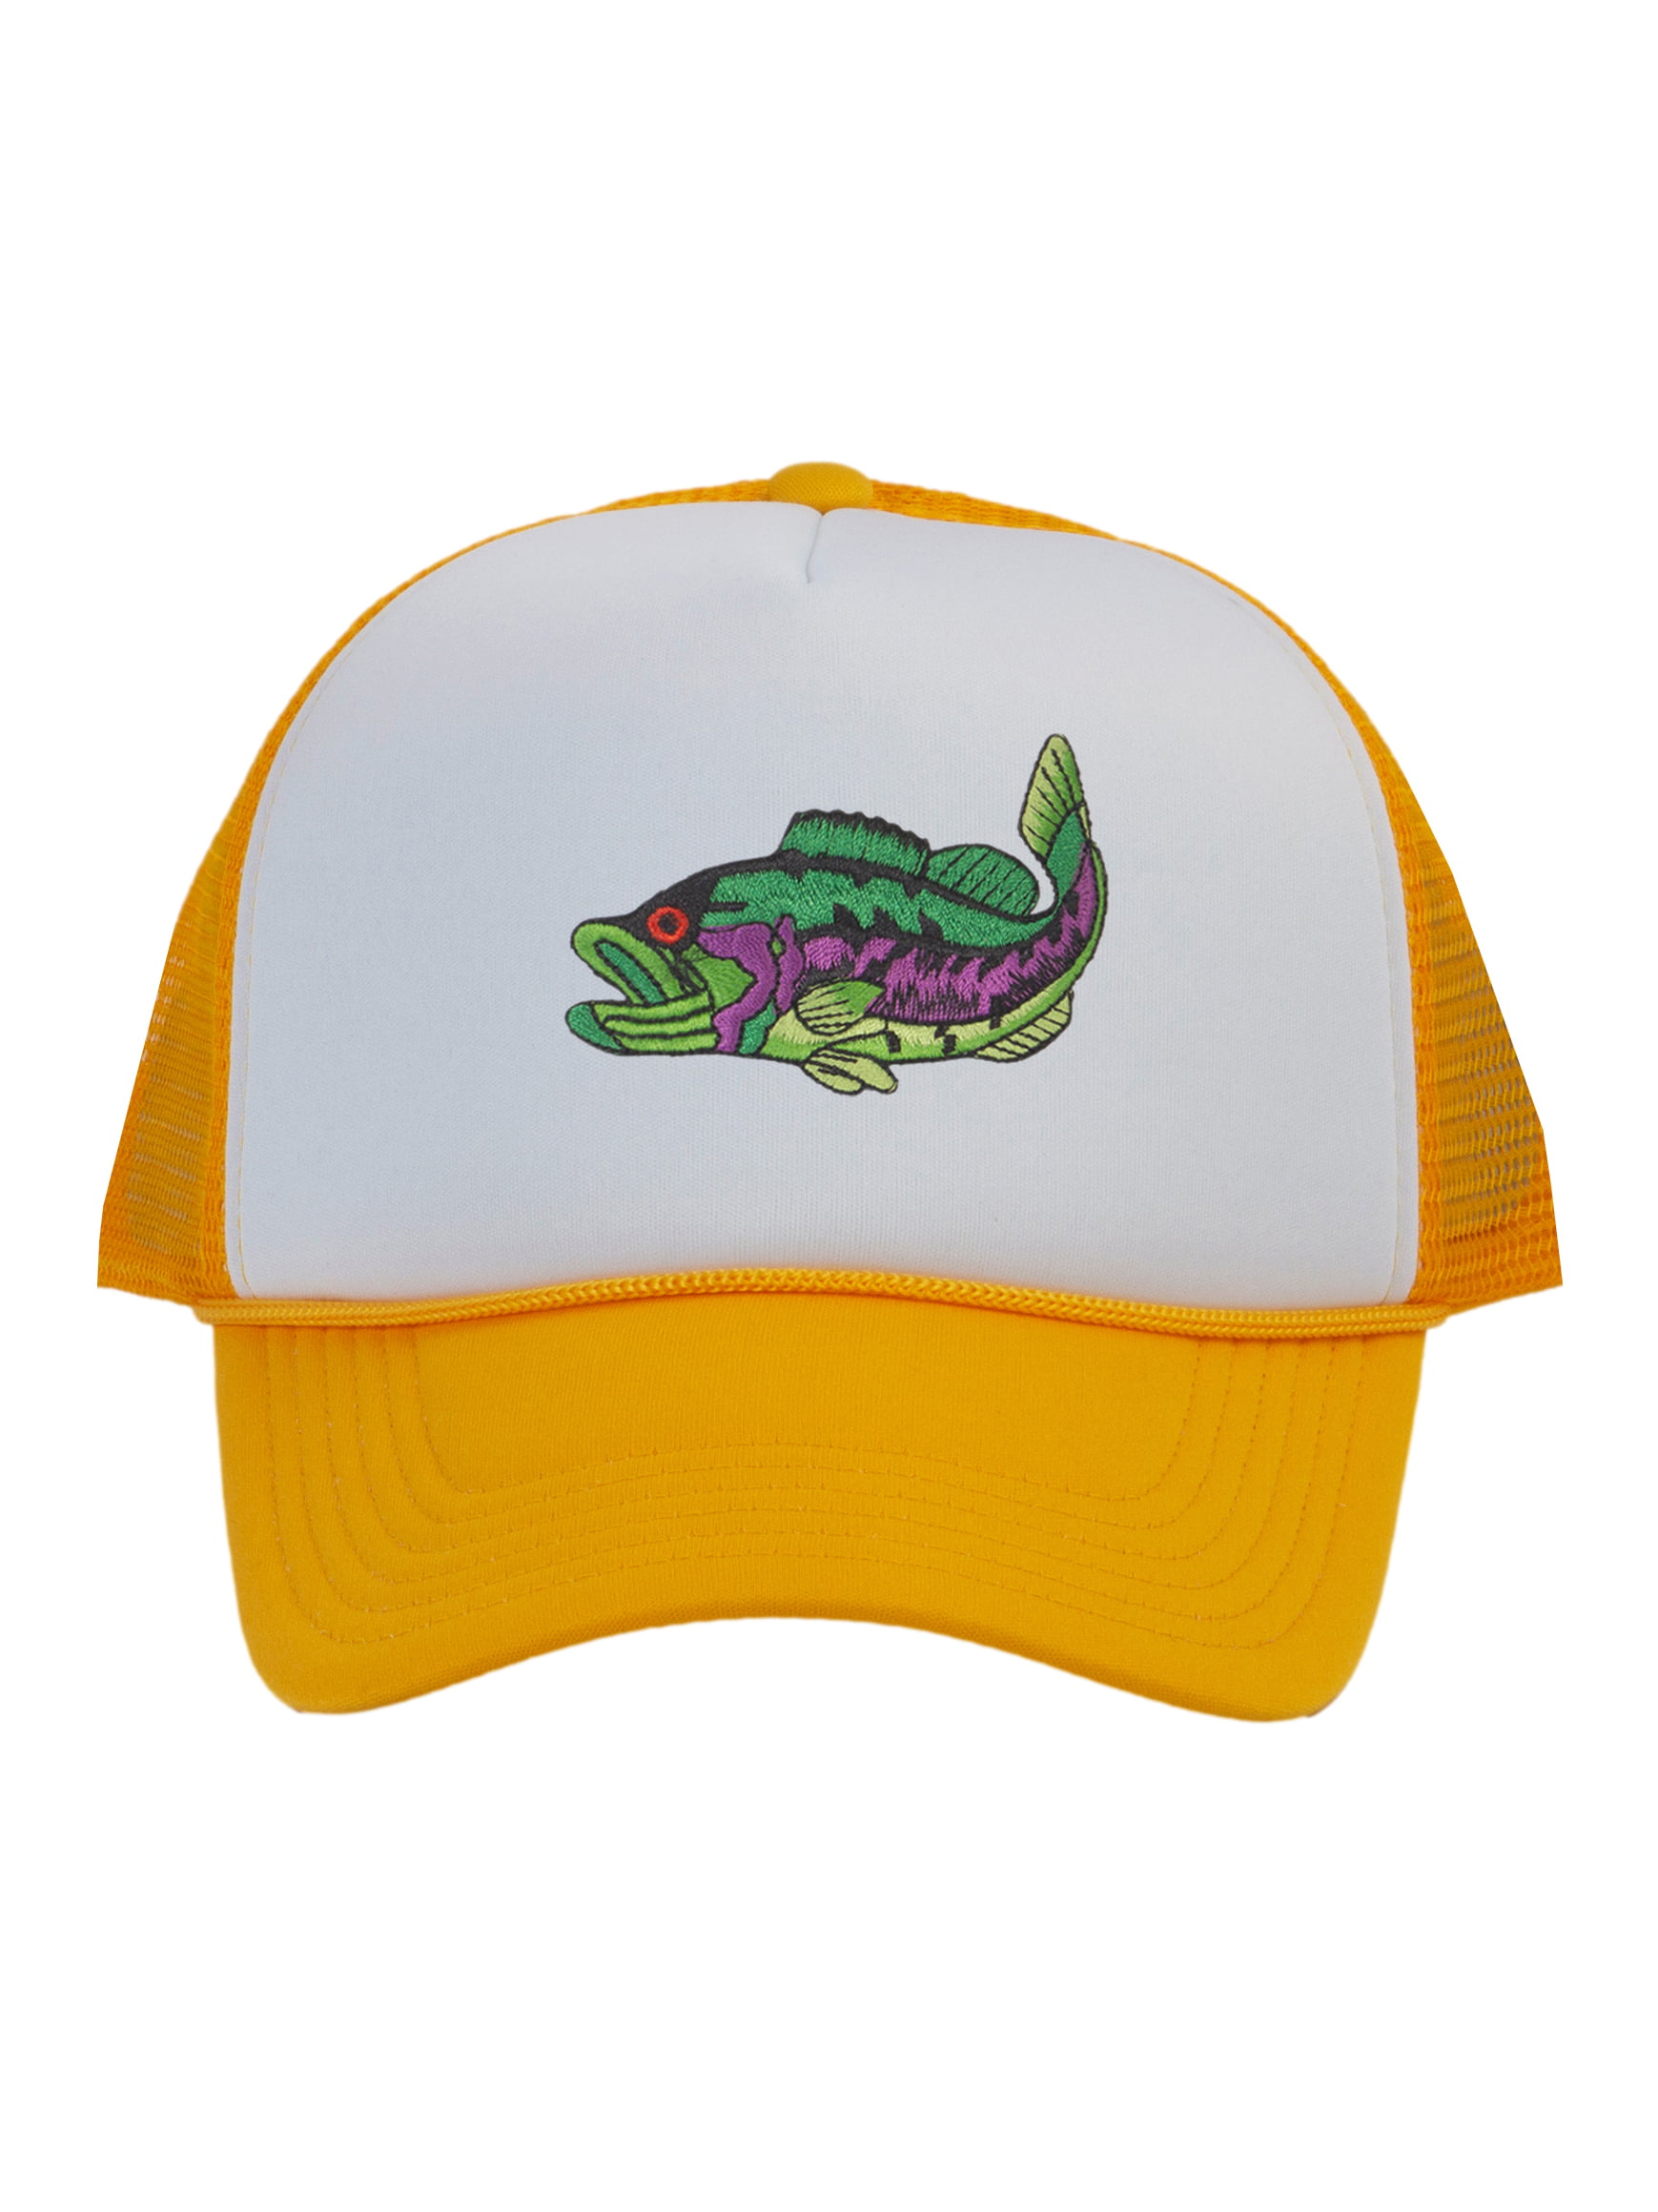 Men's Fishing Cap Outdoor Bass Fisherman Trucker Hat, White/Gold